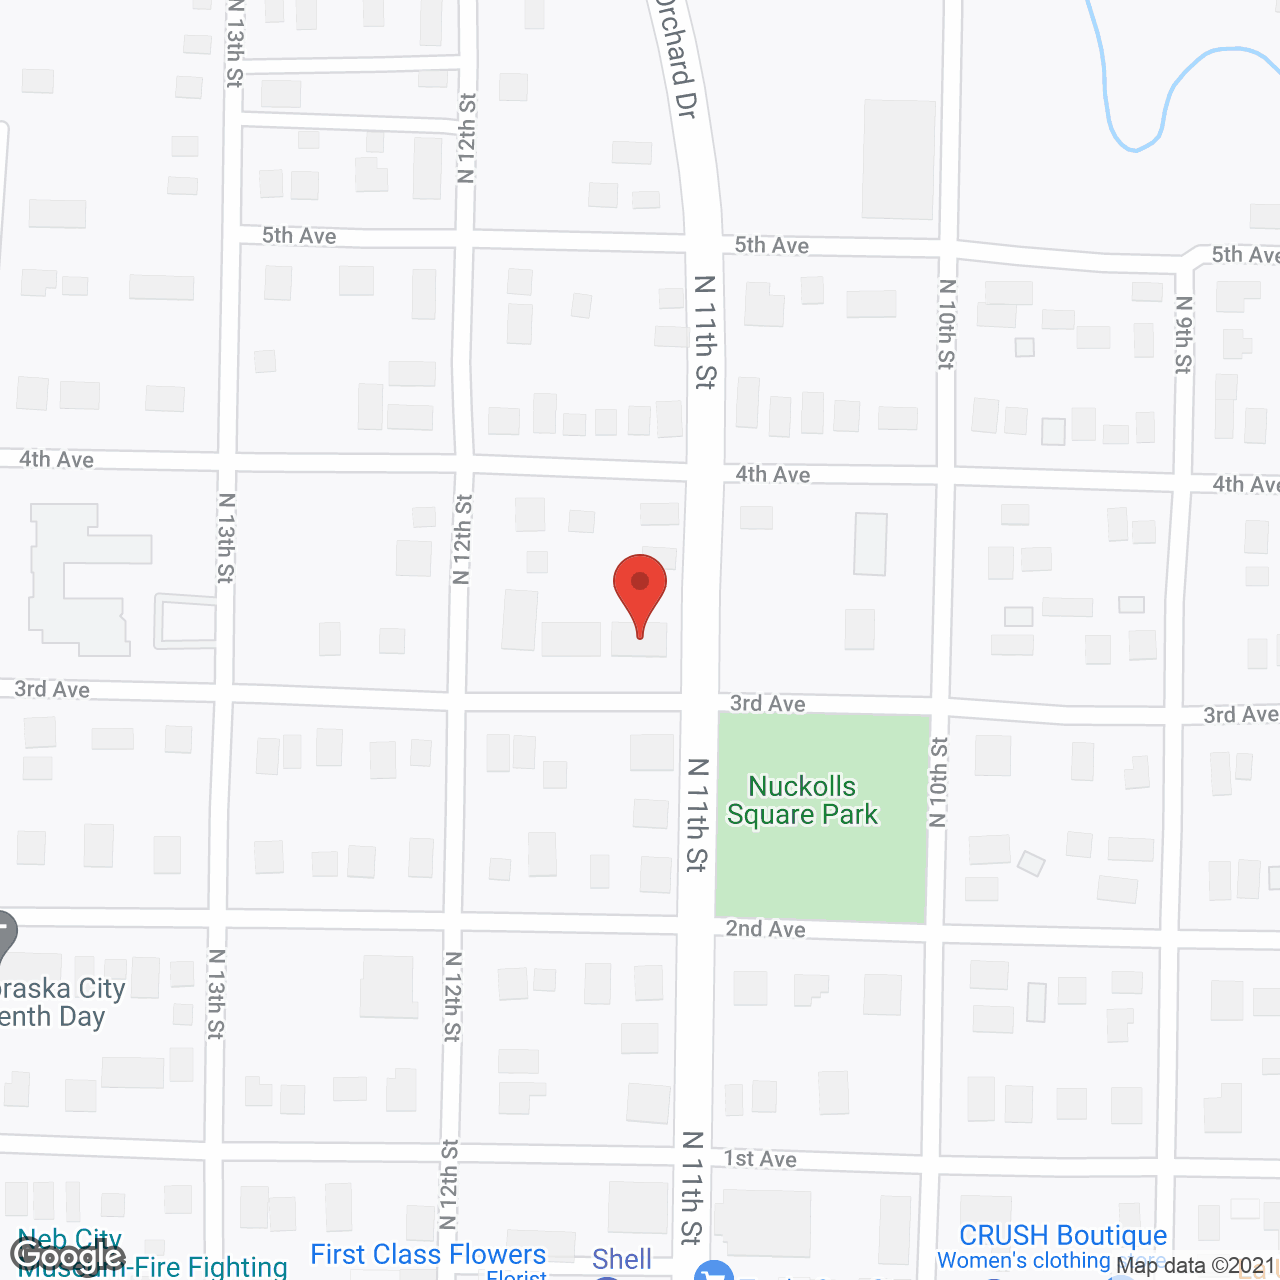 Duff's Friendship Villa in google map